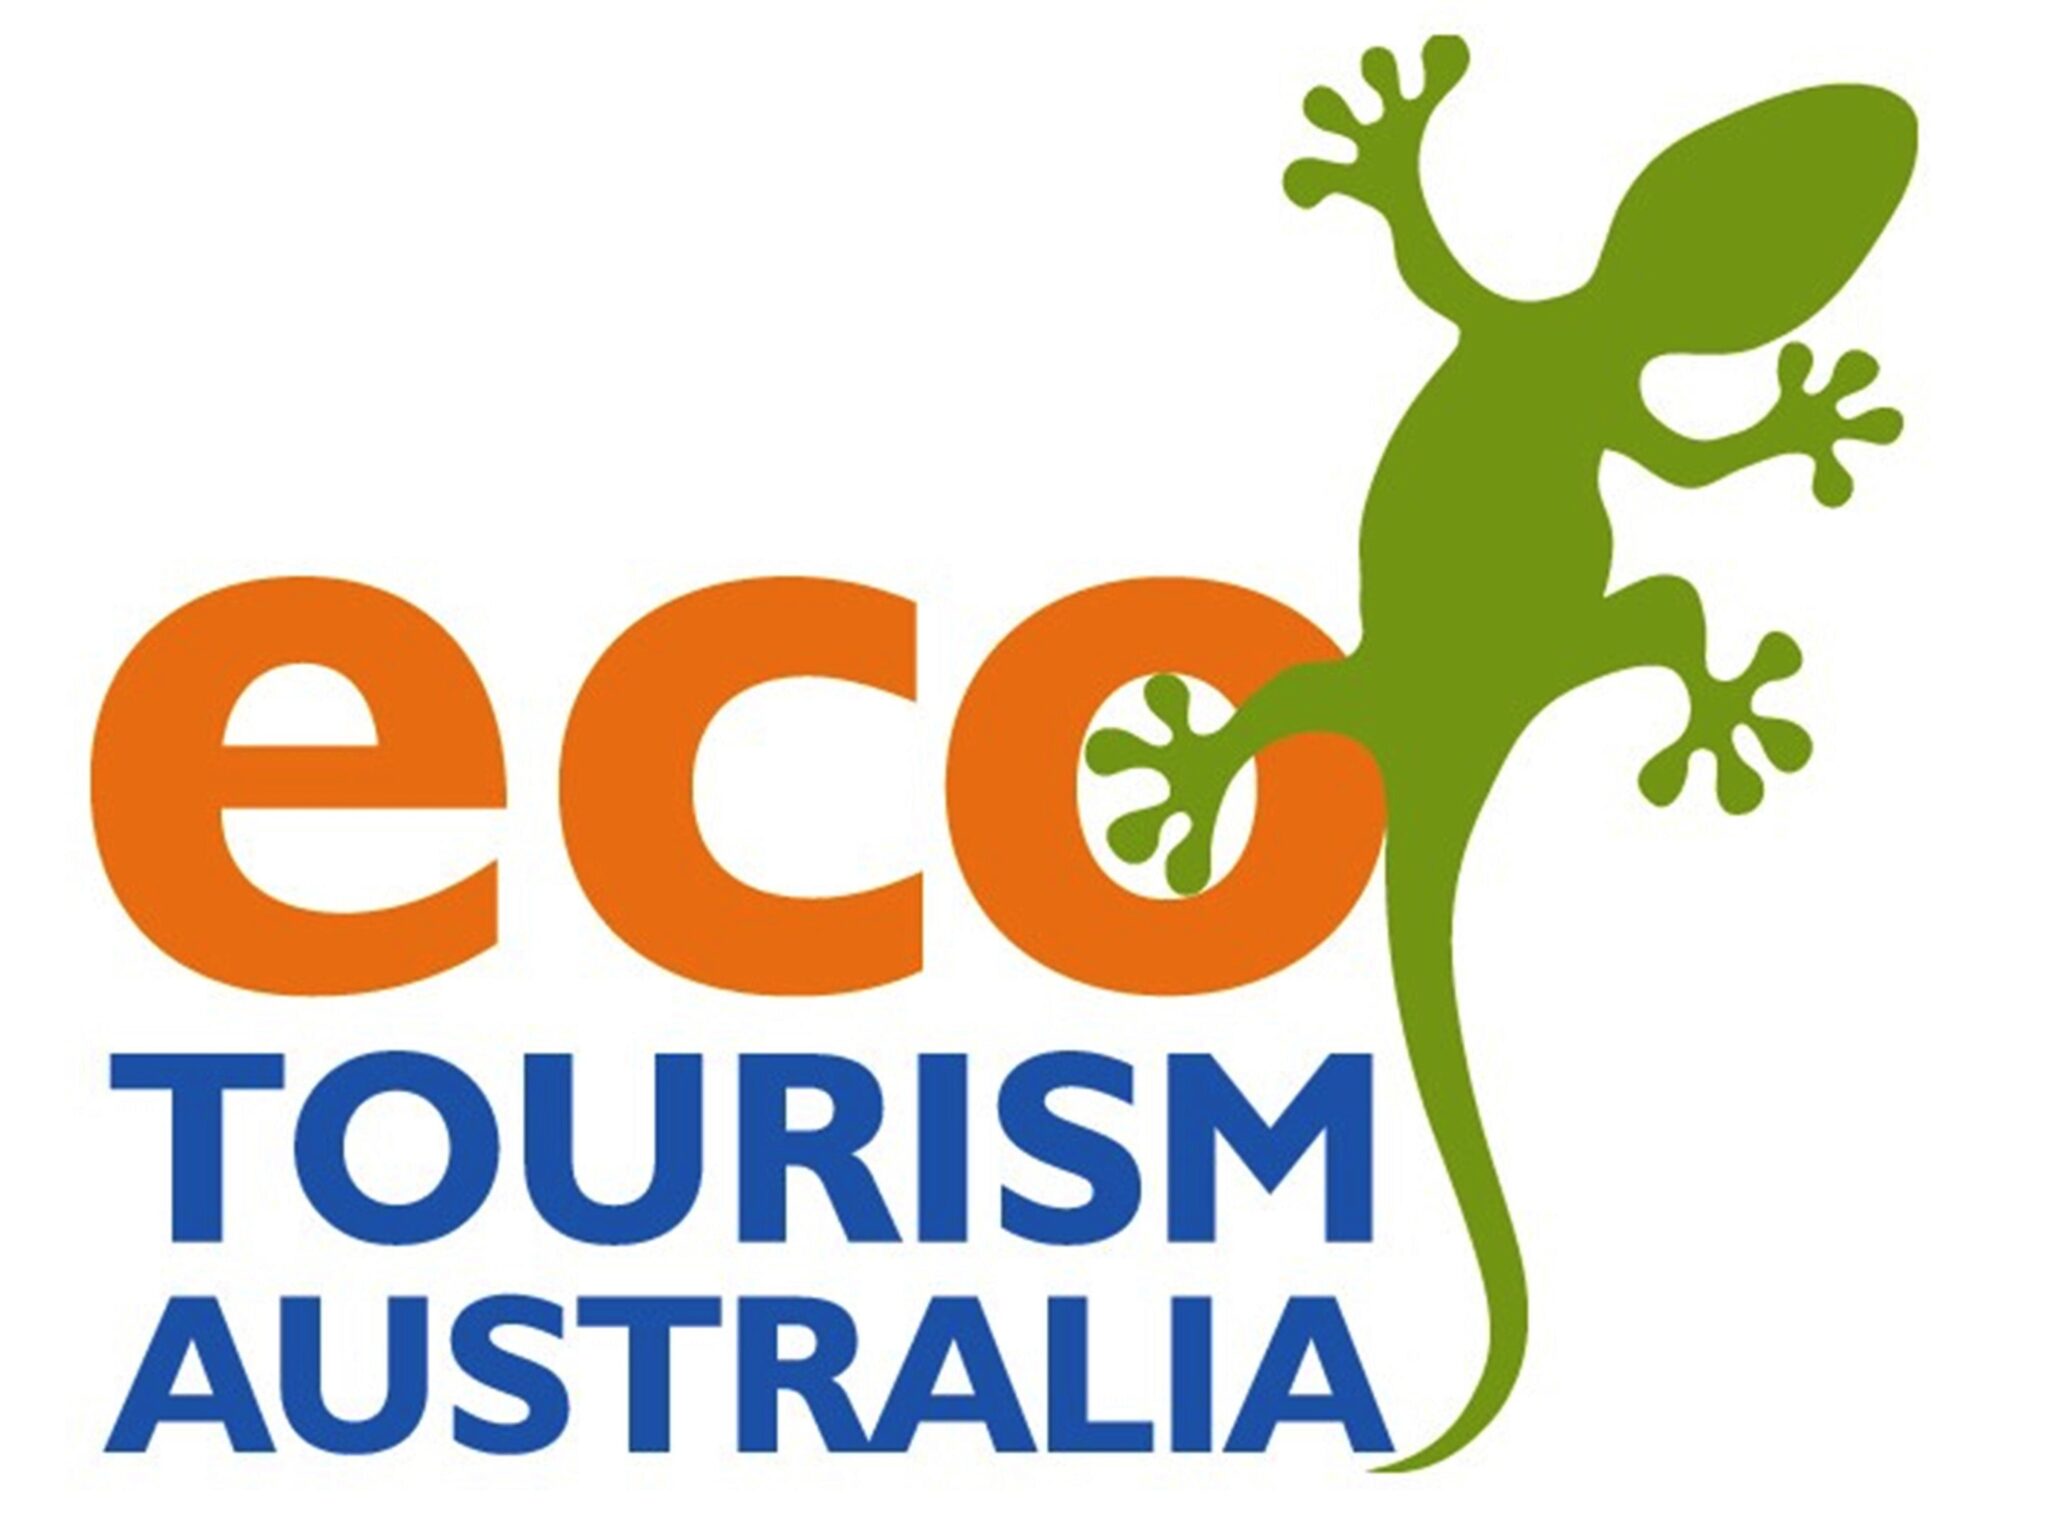 Sustainable tourism. Global sustainable Tourism Council. Устойчивый туризм логотип. Sustainable Tourism Ecotourism. Туристический логотип Австралии.